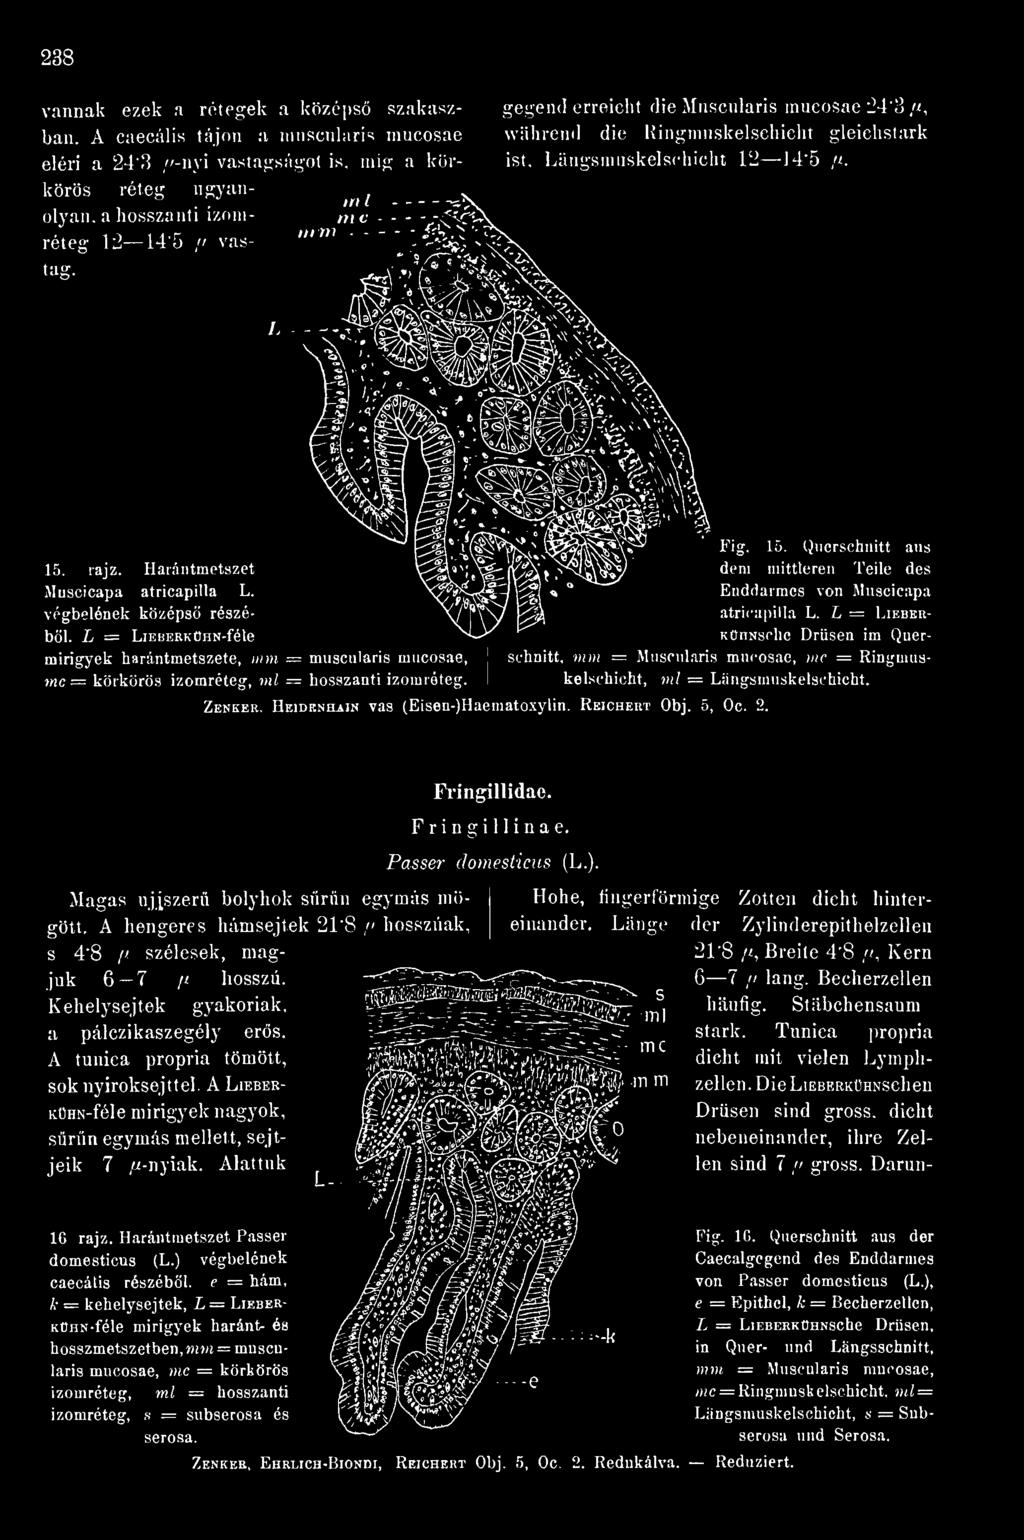 Heidenhain vas (Eisen-)Haematoxylin. Reichert Obj. 5, Oc. ml = Längsmuskelschicht. Fringillidae. Fringillinae. Passer domesticus (L.). Magas uj.iszerü bolyhok srn egymás mögött.